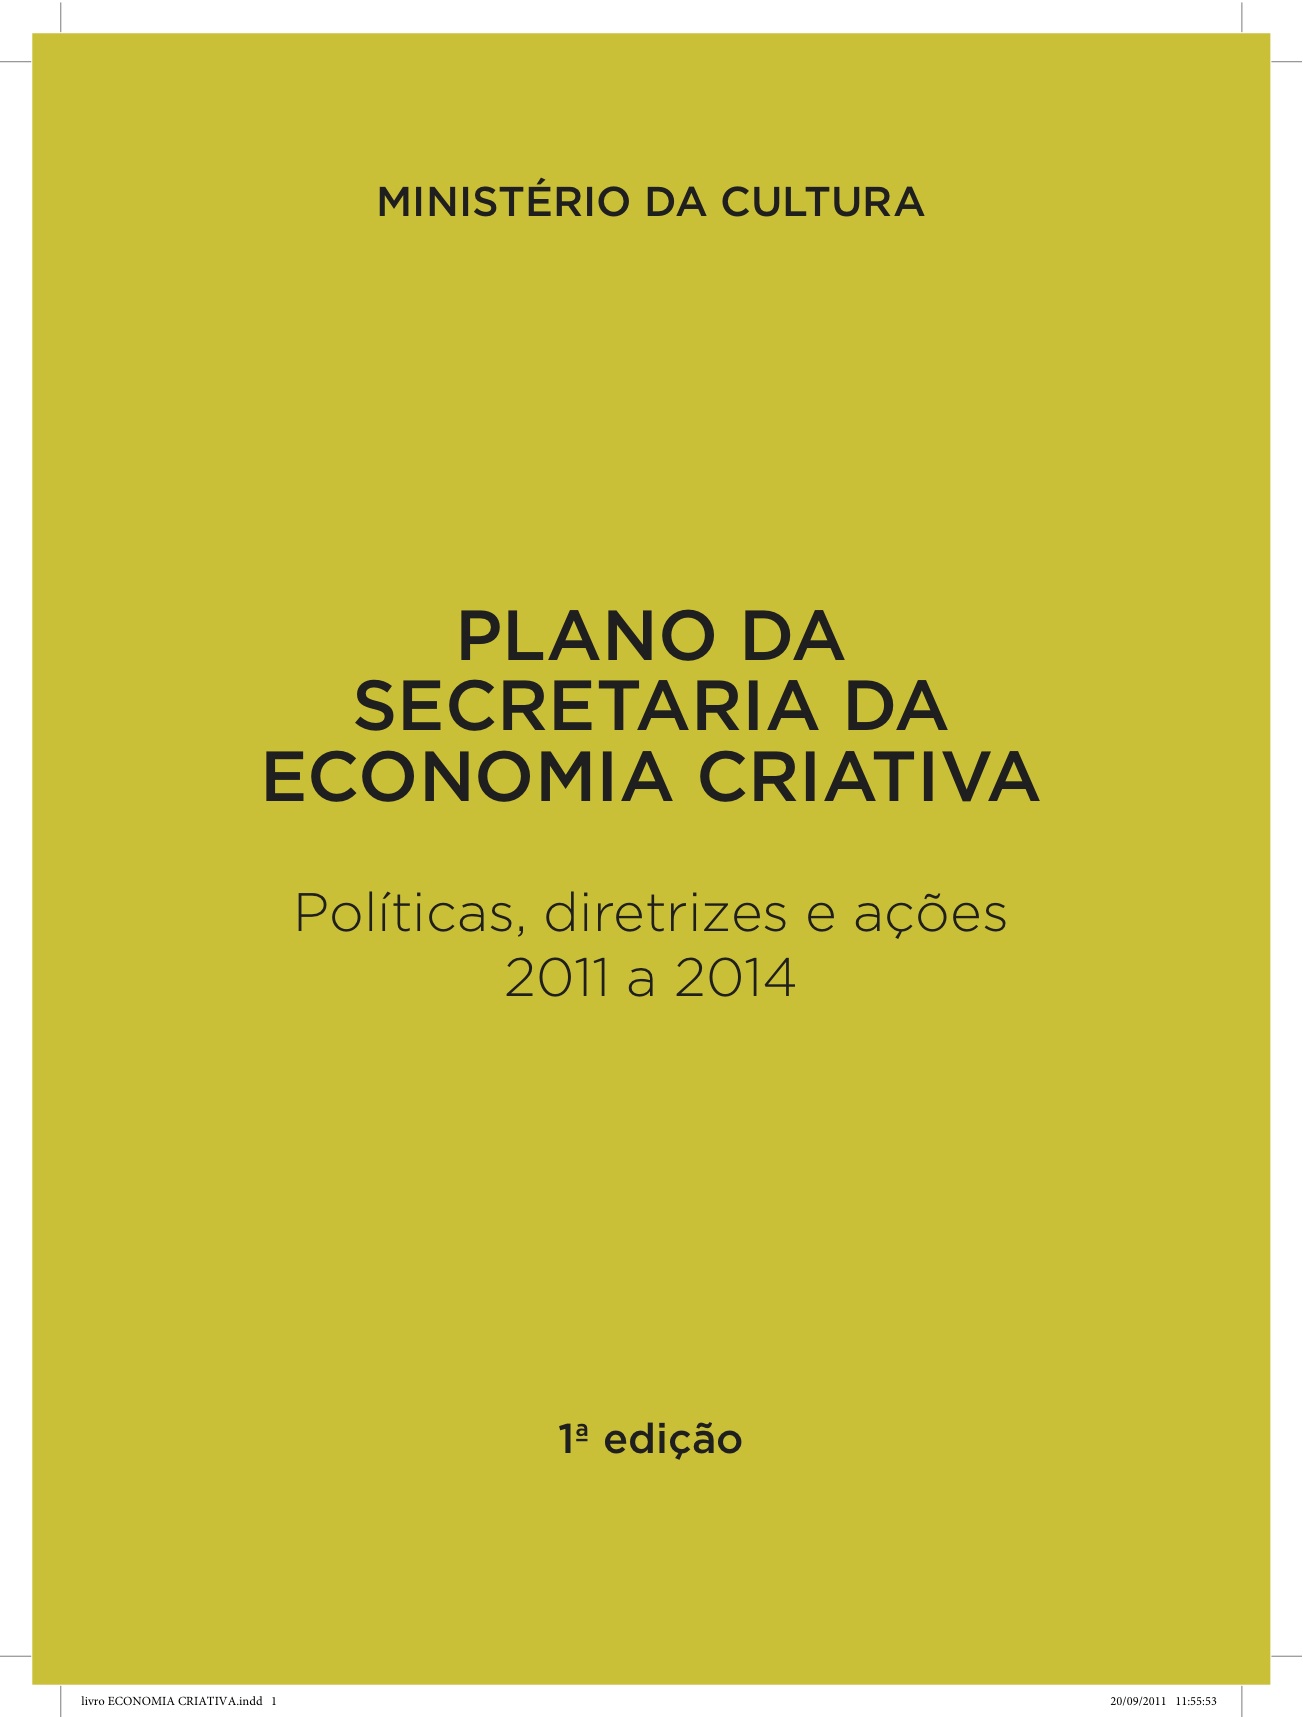 Plano da Secretaria de Economia Criativa